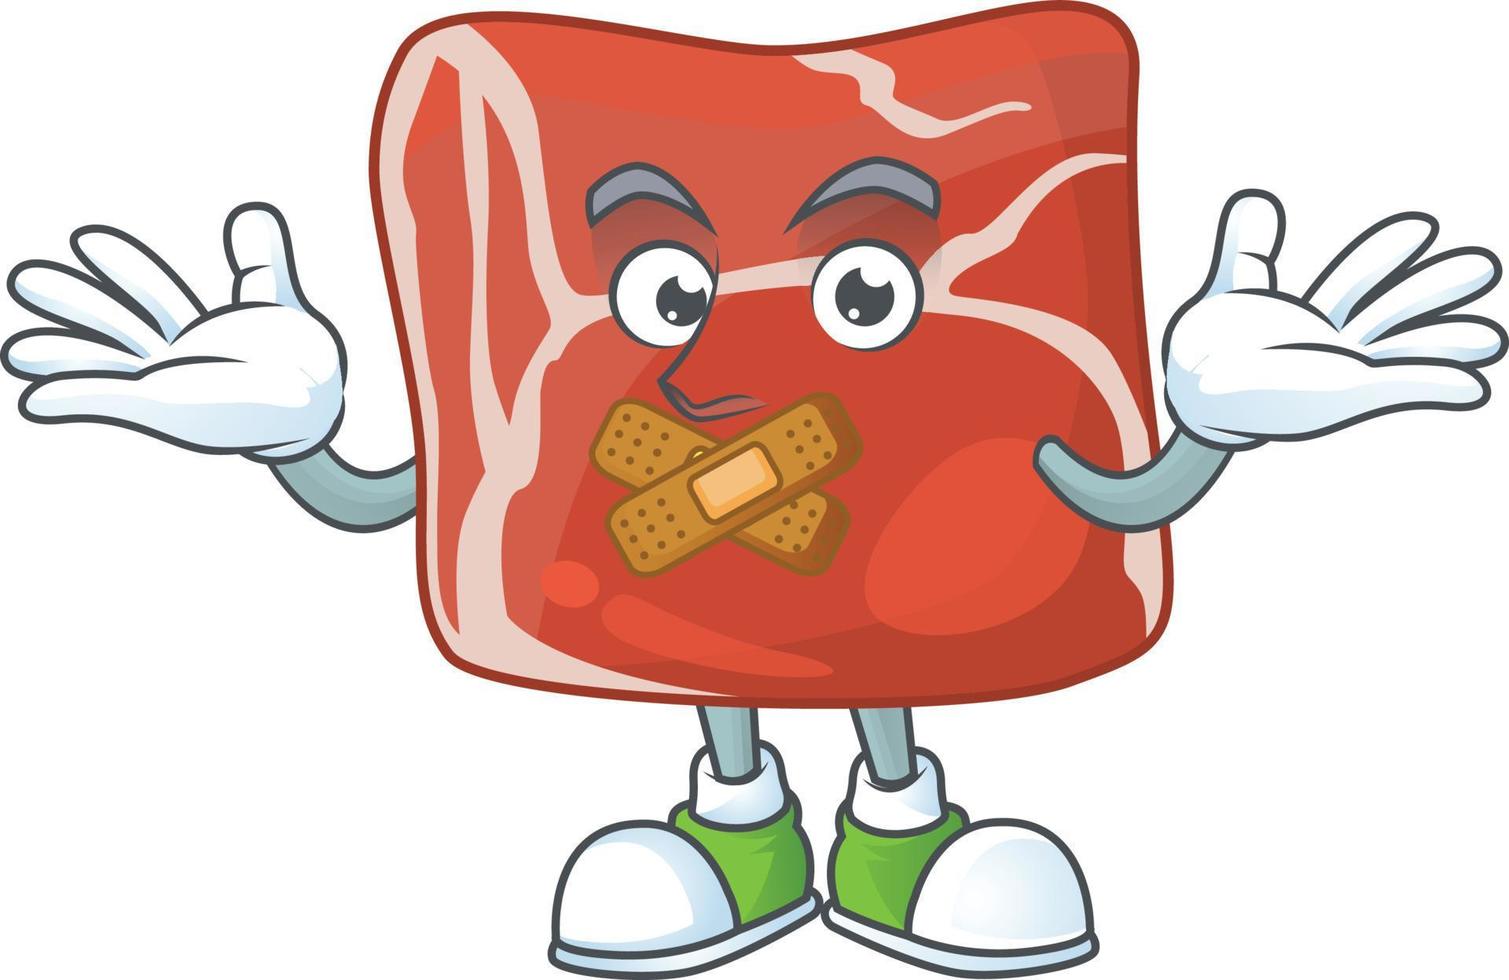 A cartoon character of beef vector